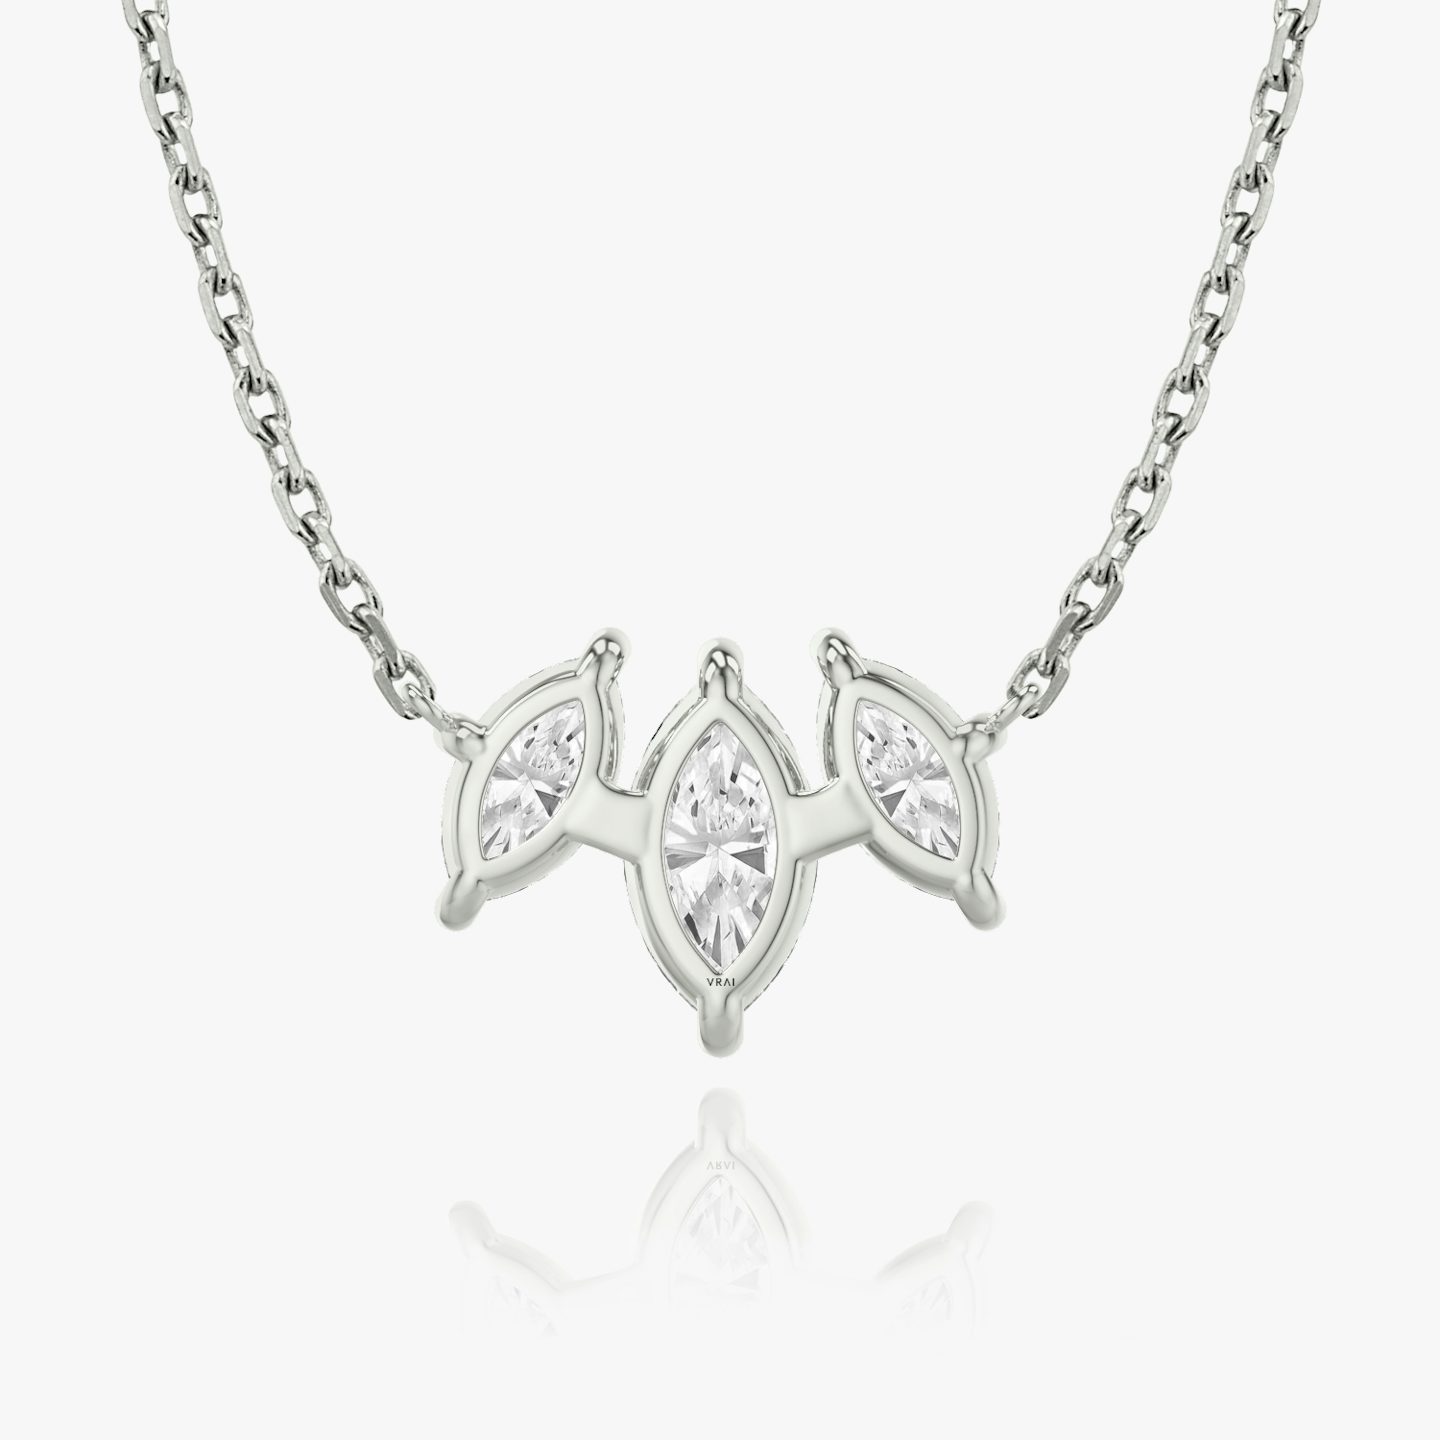 Arc Necklace | Marquise | 14k | White Gold | diamondCount: 3 | diamondSize: large | chainLength: 16-18